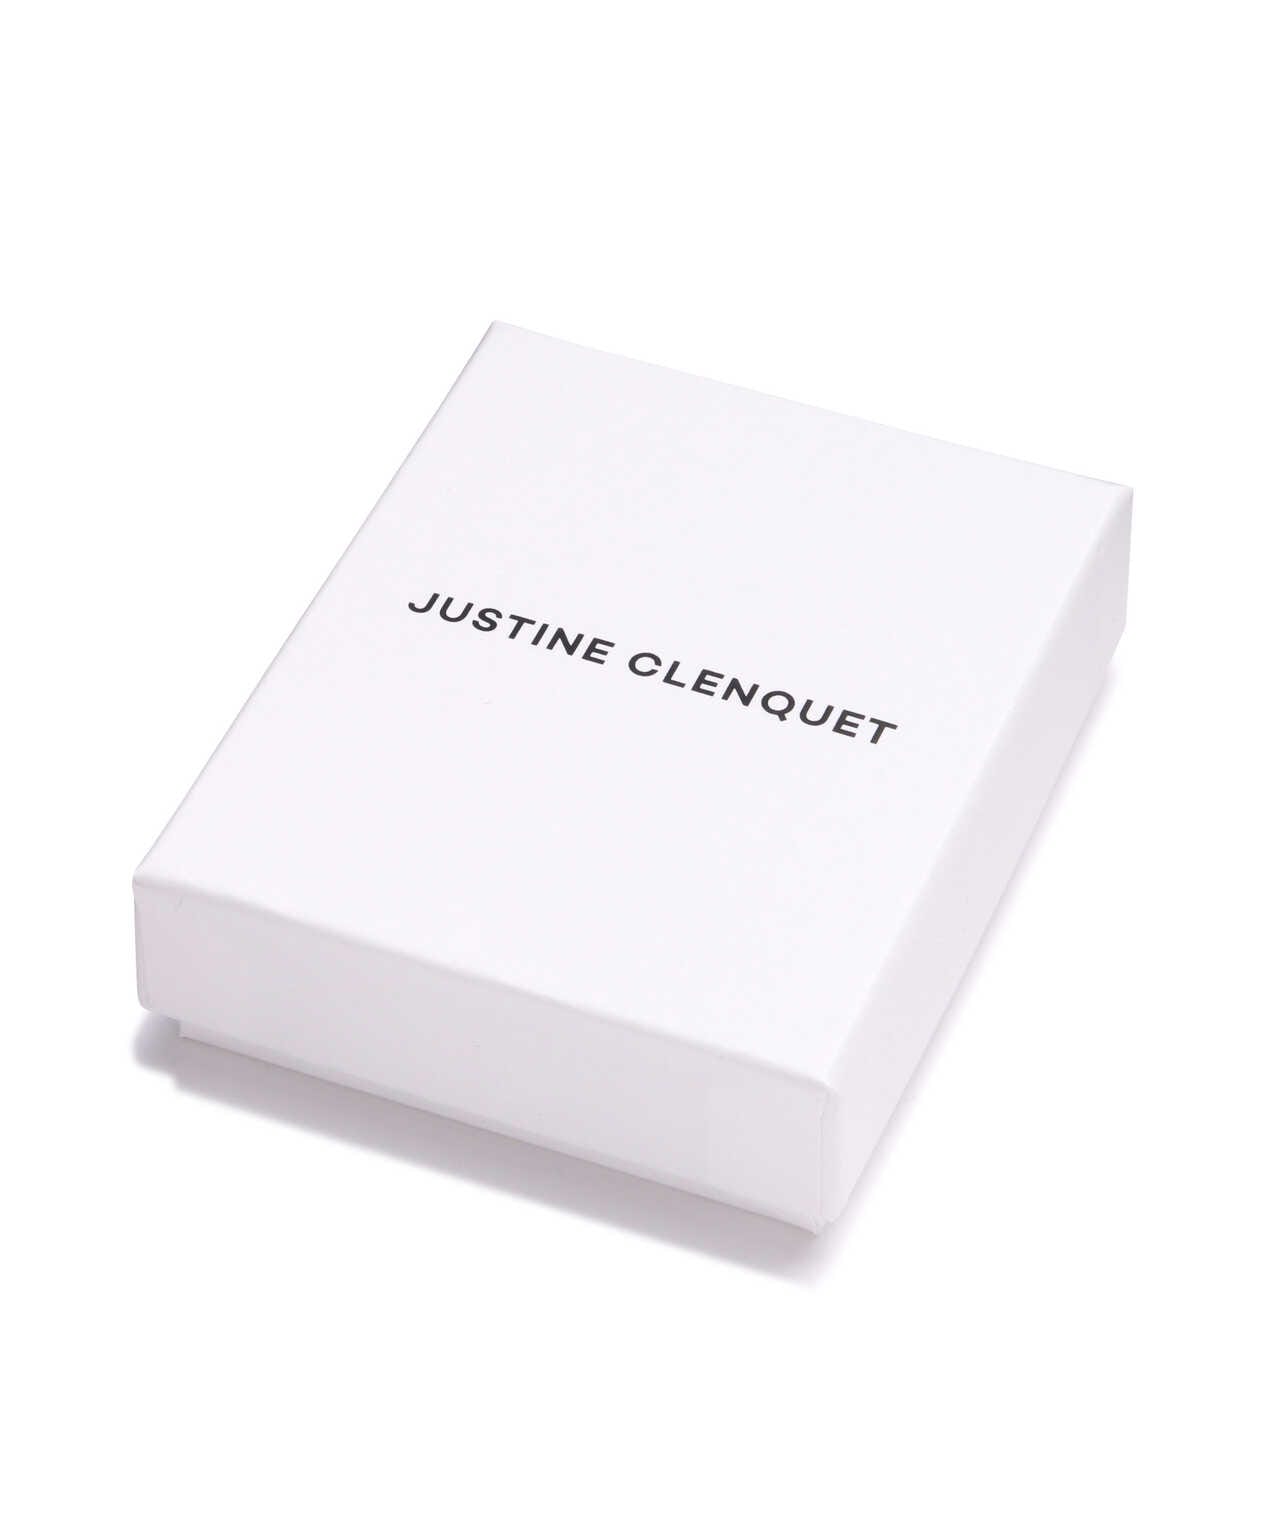 JUSTINE CLENQUET/ジュスティーヌ・クランケ/ALI BRACELET